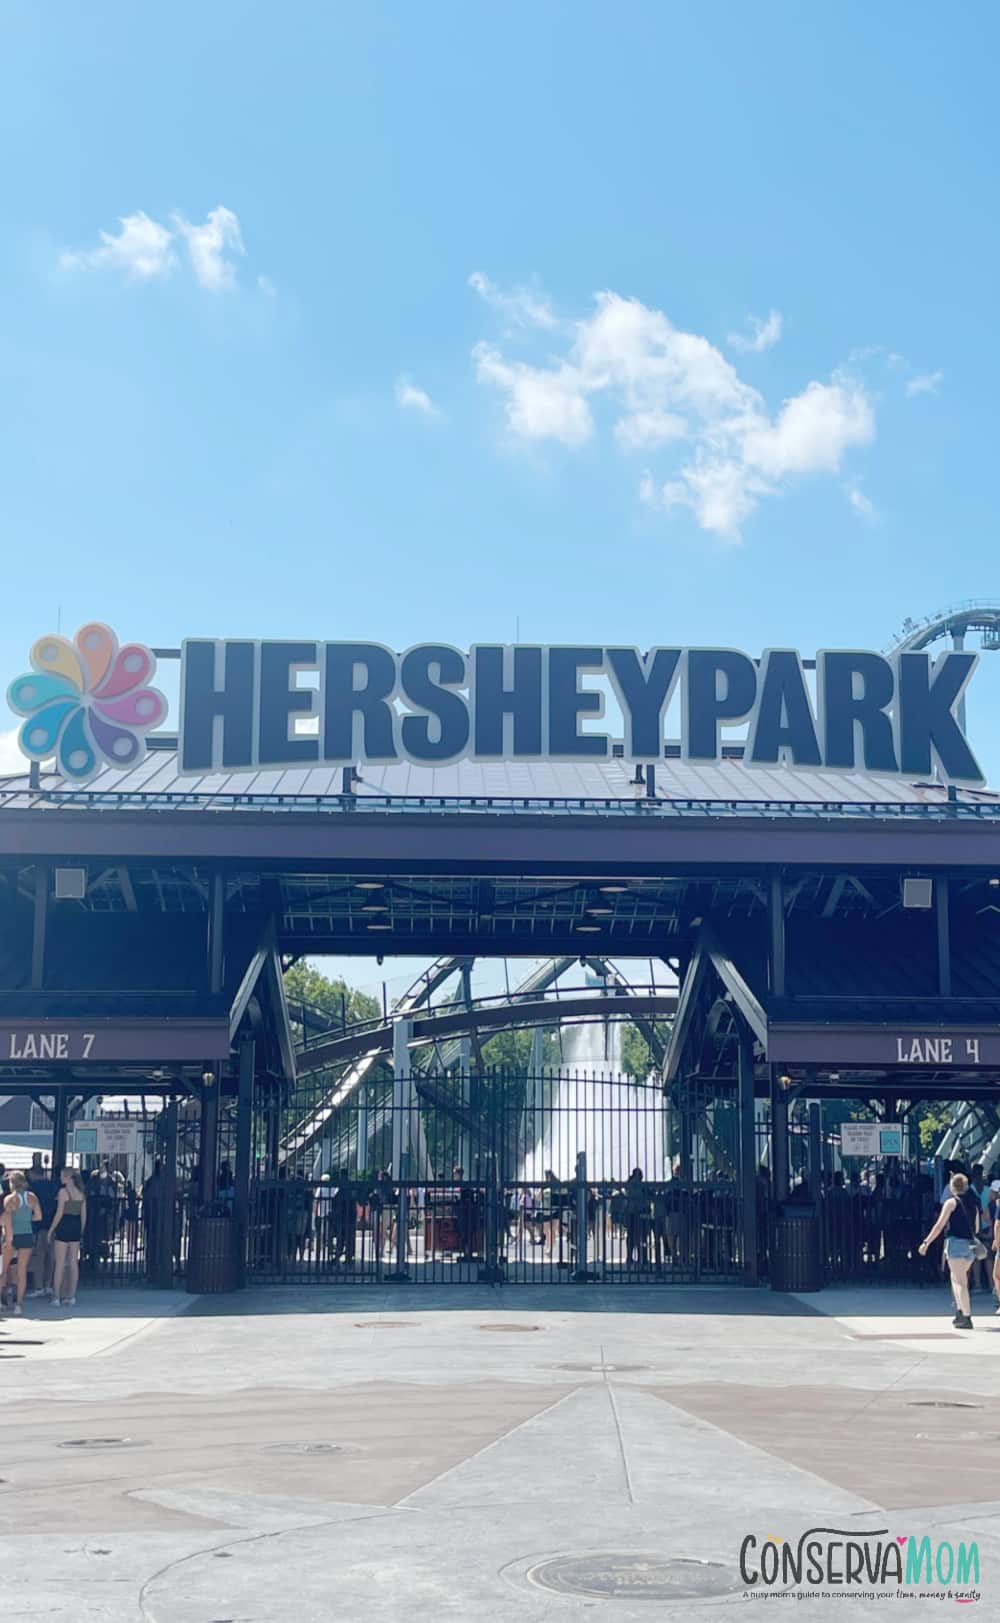 Reasons to Visit Hersheypark